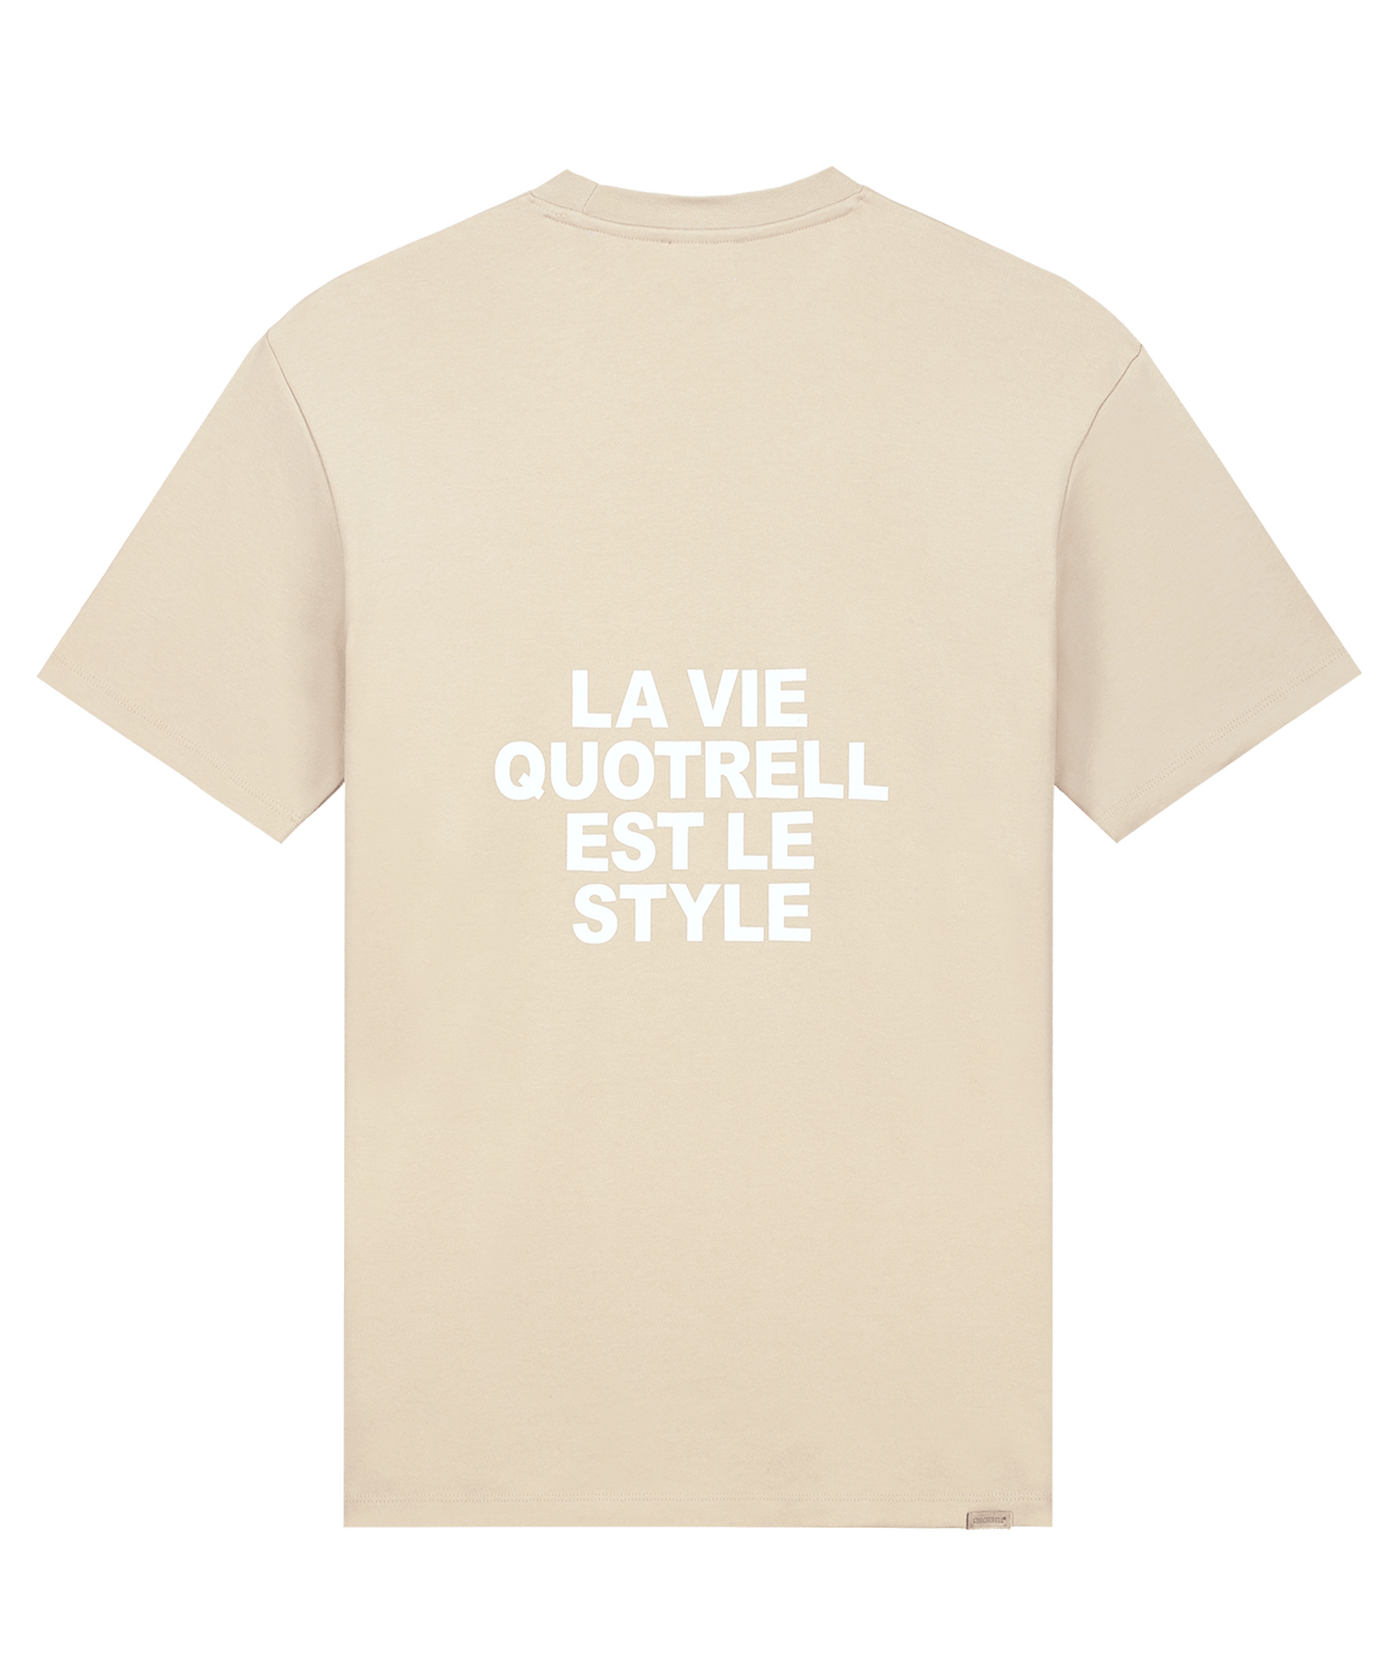 Quotrell - La Vie - T-shirt - Oat/offwhite